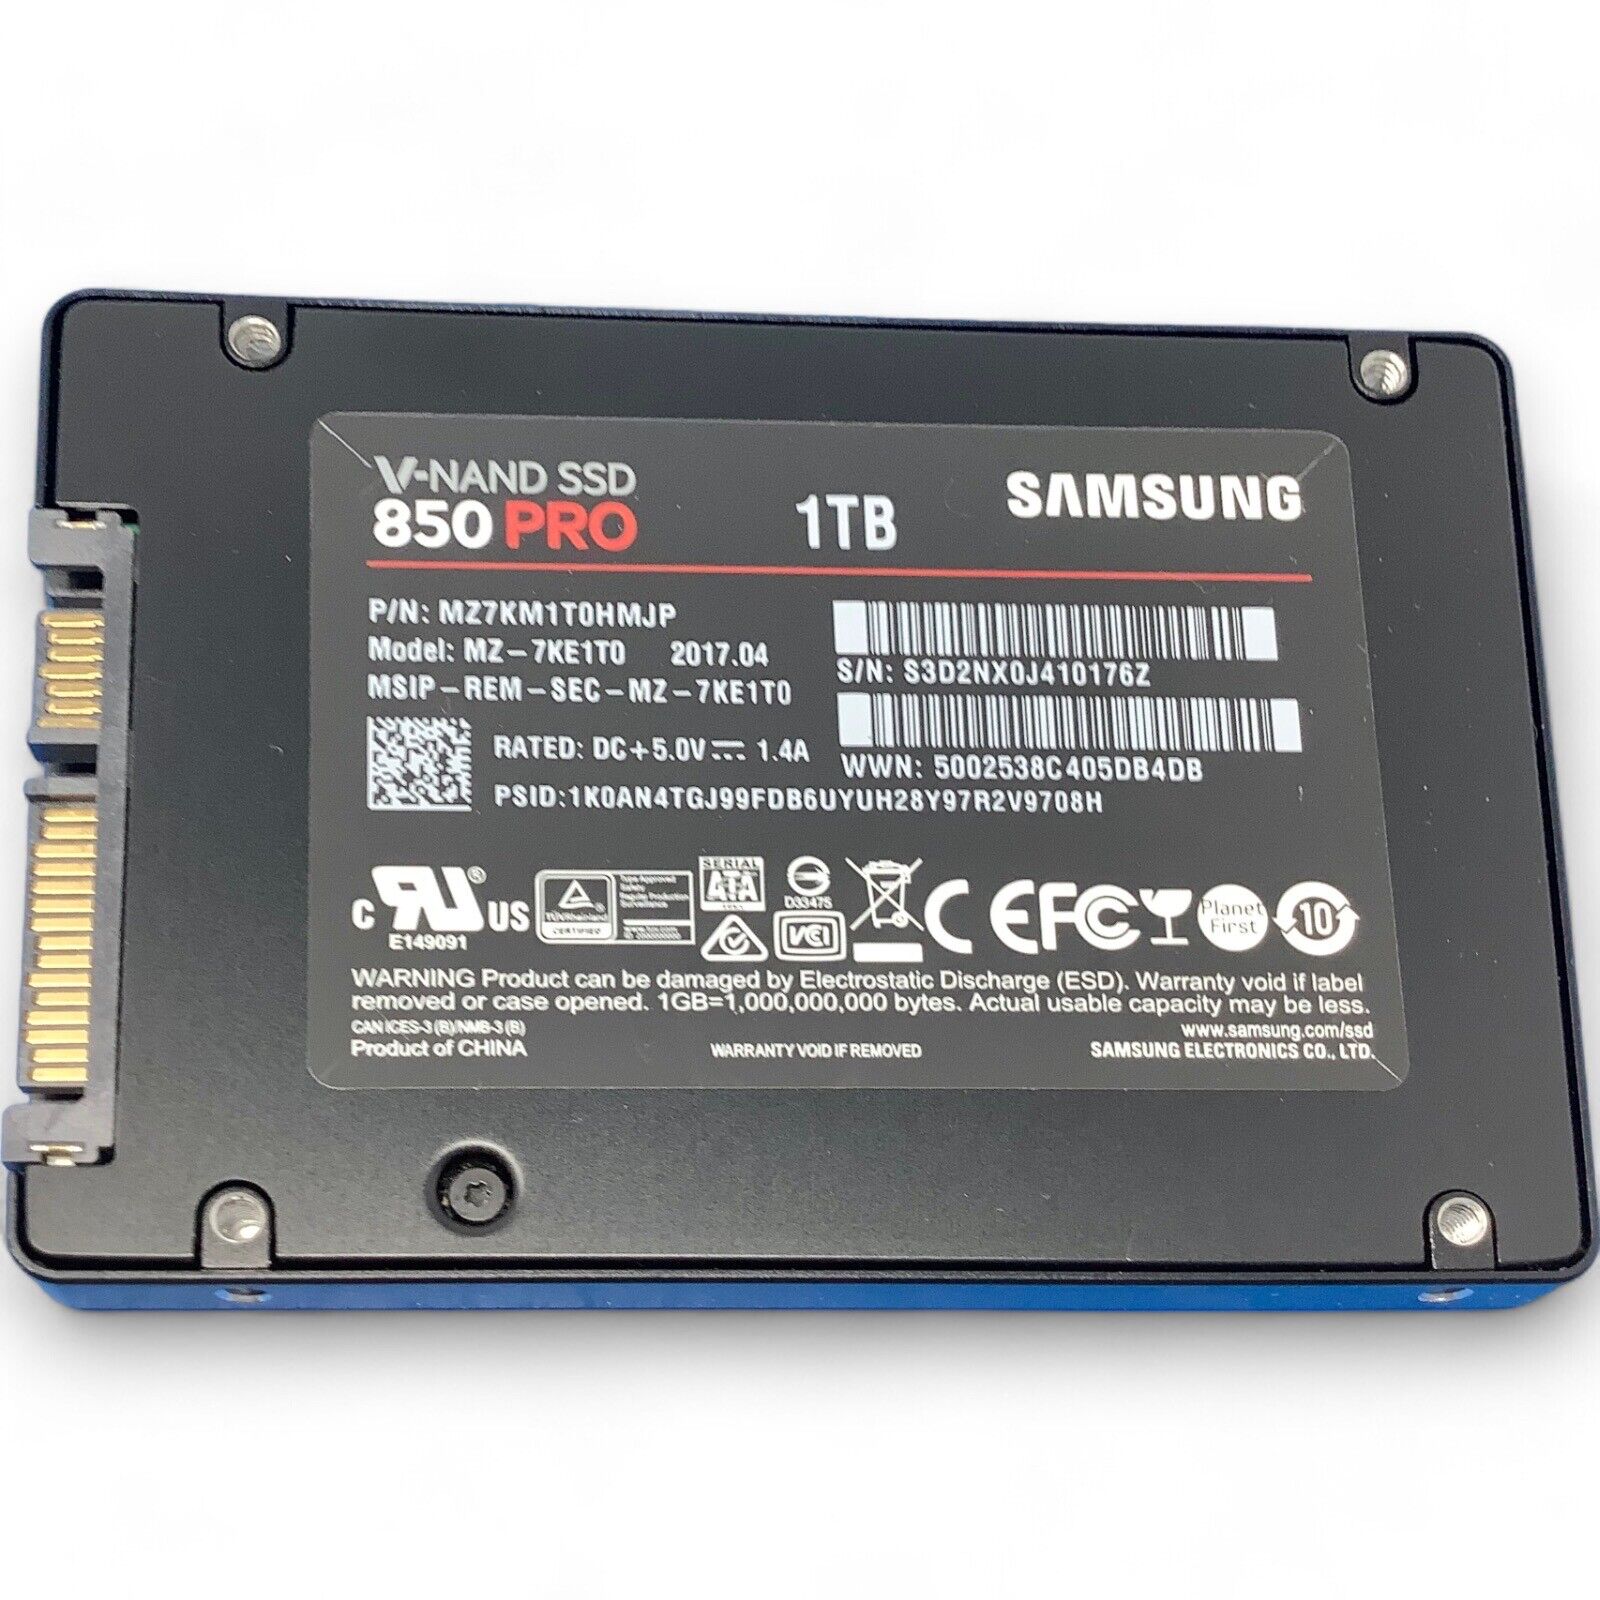 Samsung 850 PRO 2.5” 1TB MZ-7KE1T0 SSD 6Gb/s MZ7KM1T0HMJP 72CT Power on